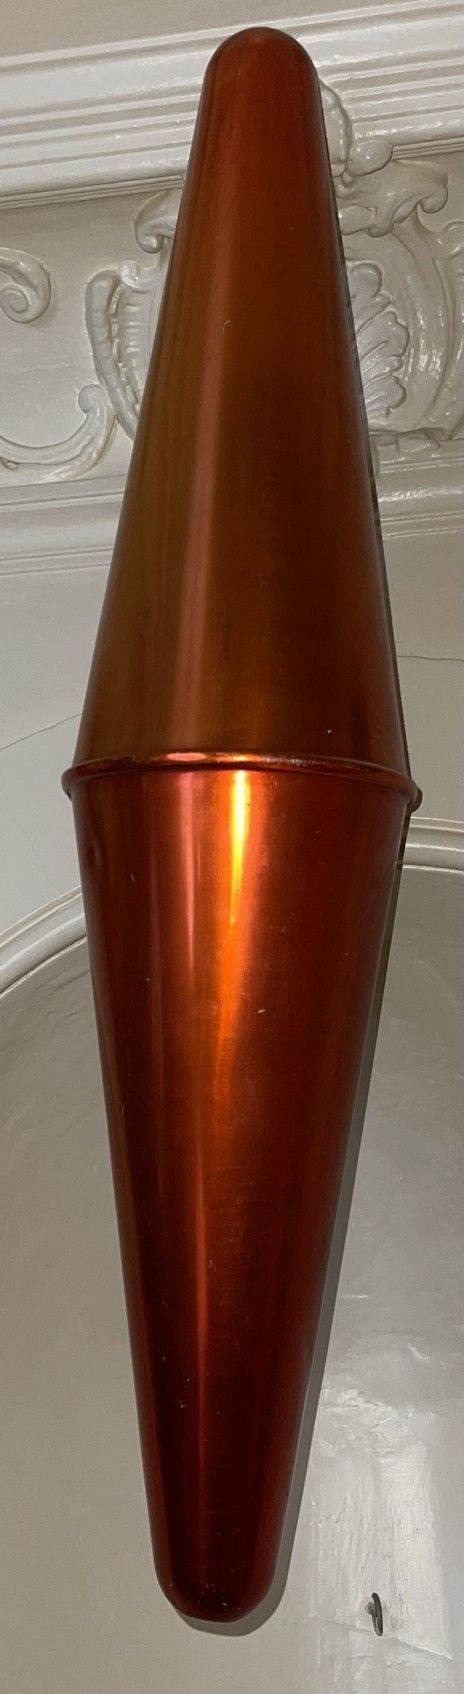 Null 喷漆金属板中的烟草胡萝卜

现代

高：79厘米（震）。